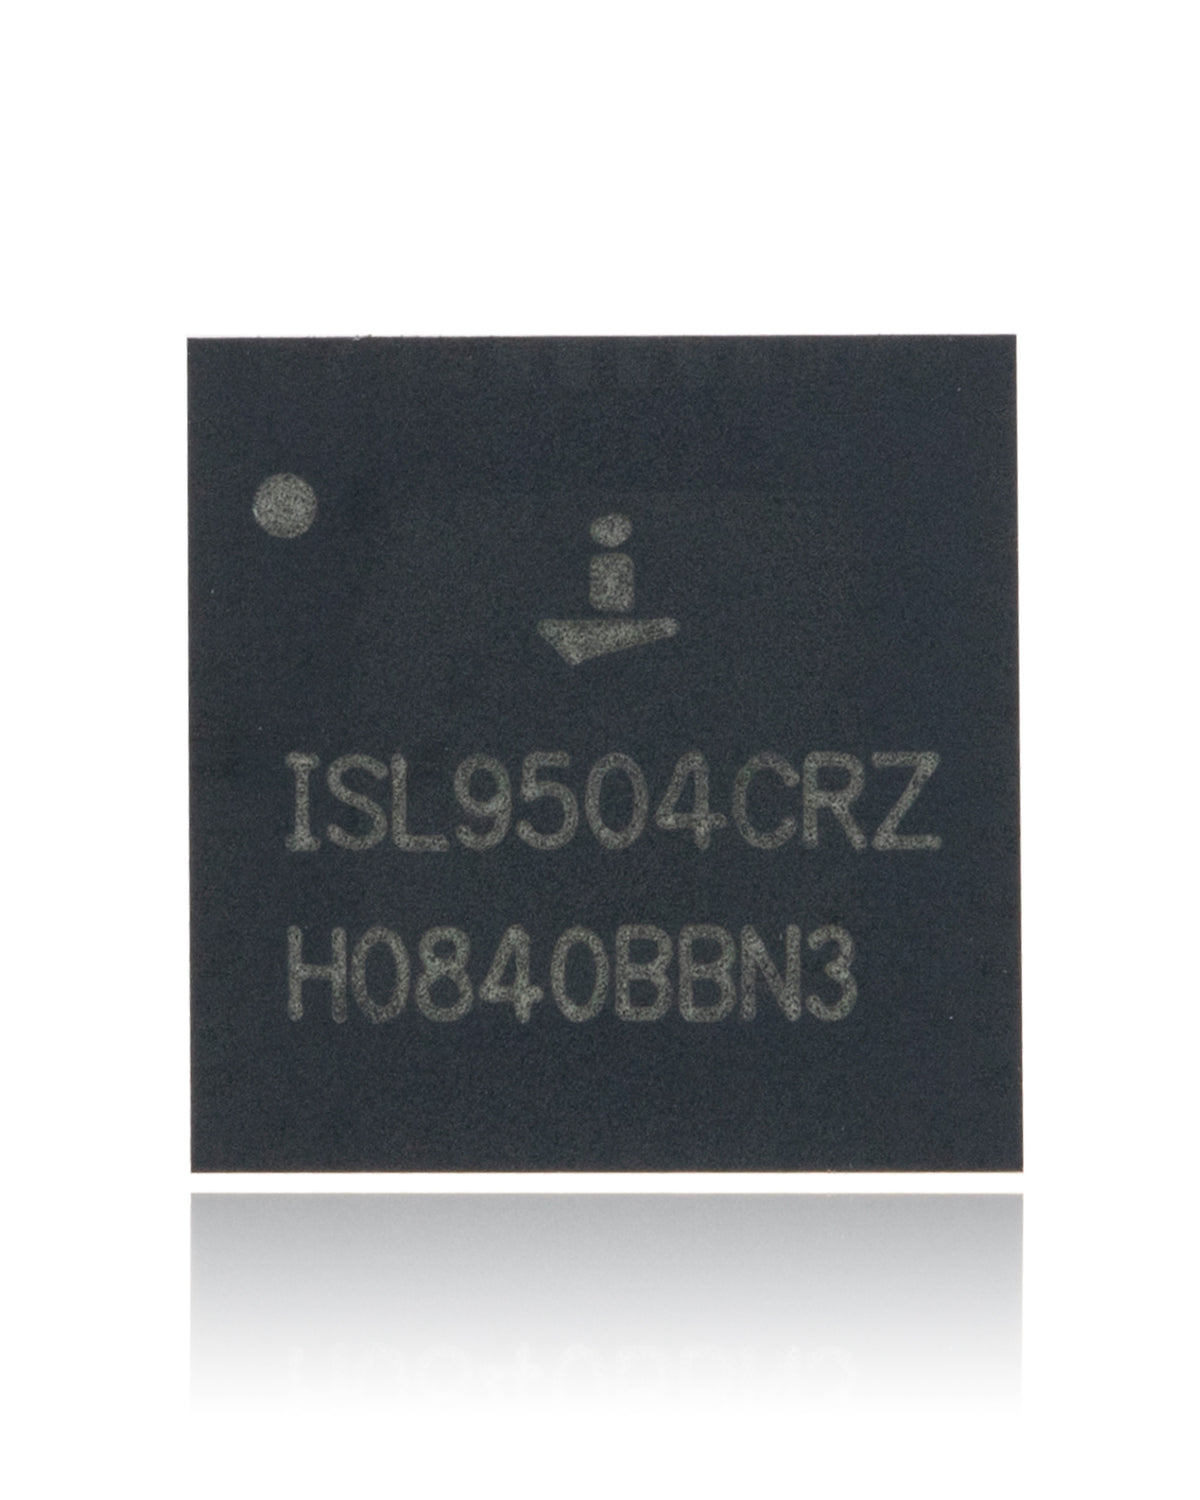 POWER IC CHIP COMPATIBLE WITH LAPTOPS / MACBOOK (INTERSIL: ISL9504BHRZ / ISL9504B / ISL9504 / ISL9504CRZ : QFN-48 PIN)